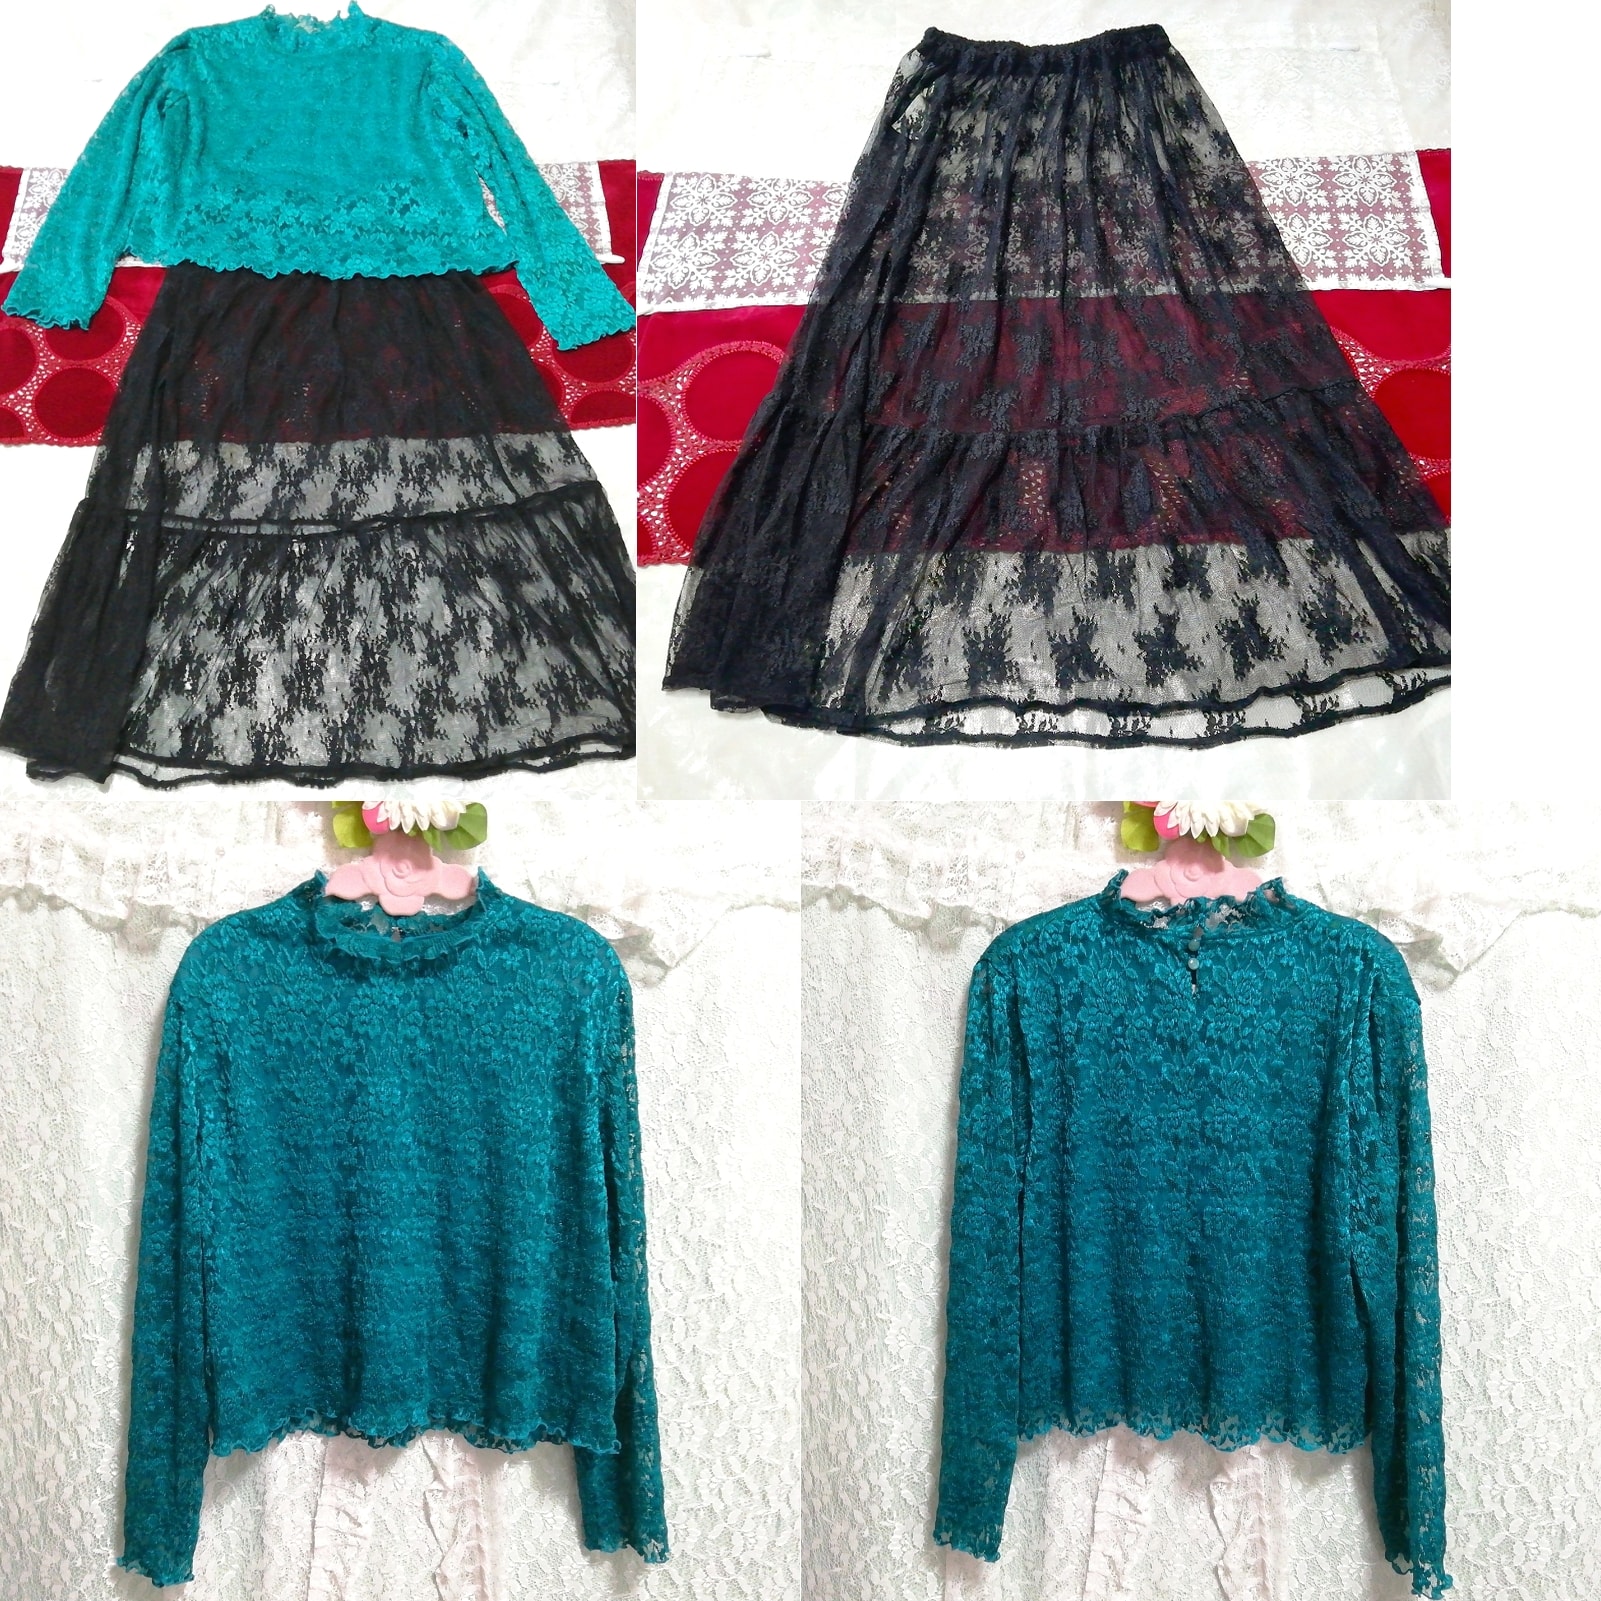 Green lace tunic negligee nightgown nightwear black see-through lace skirt 2P, fashion, ladies' fashion, nightwear, pajamas